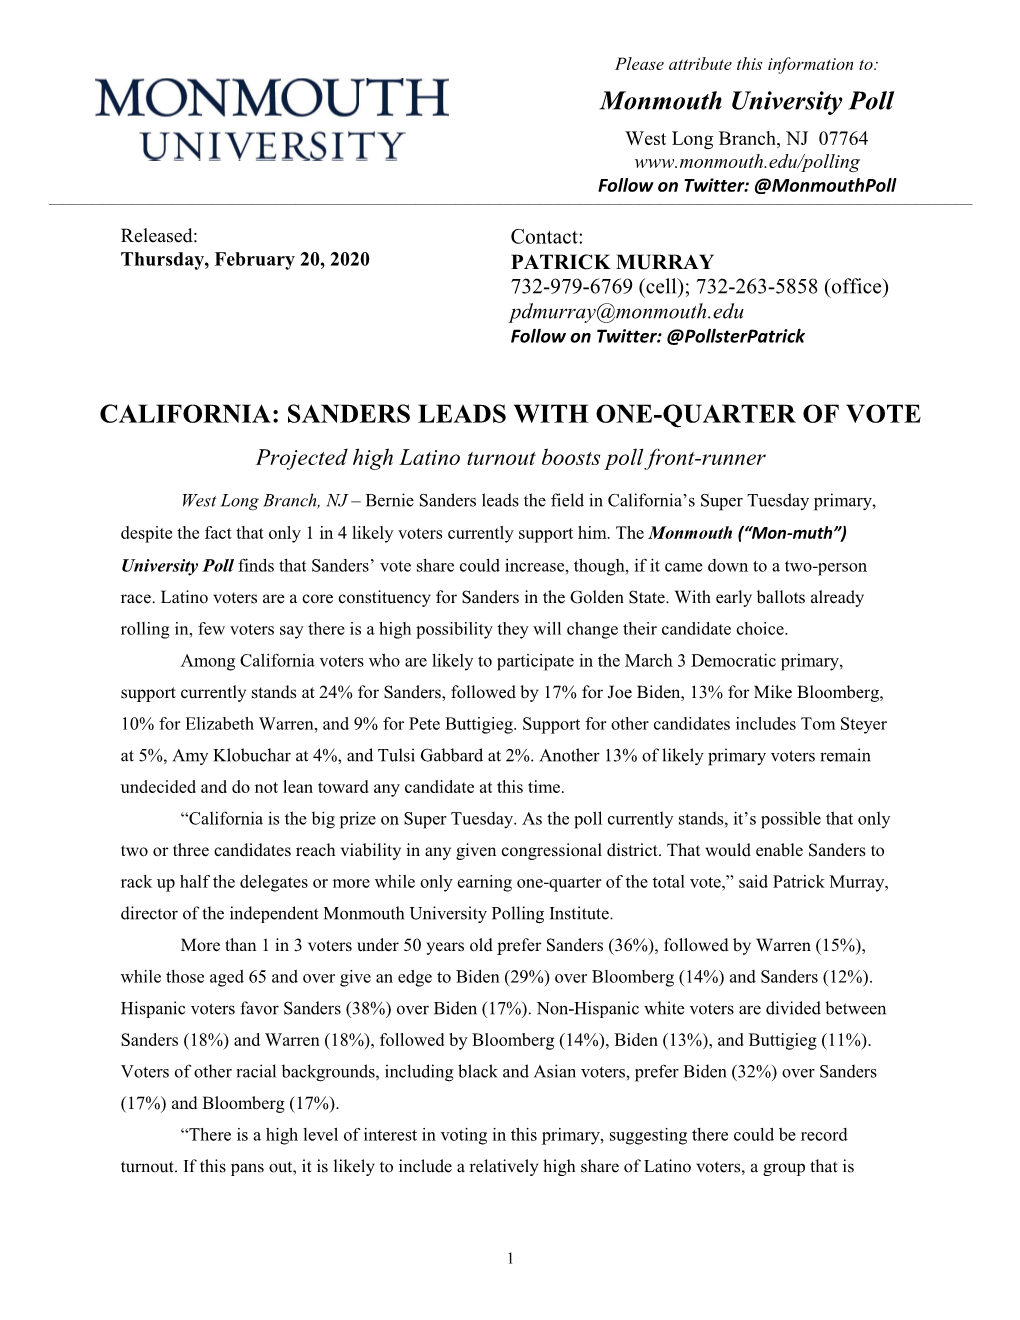 Monmouth University Poll CALIFORNIA: SANDERS LEADS